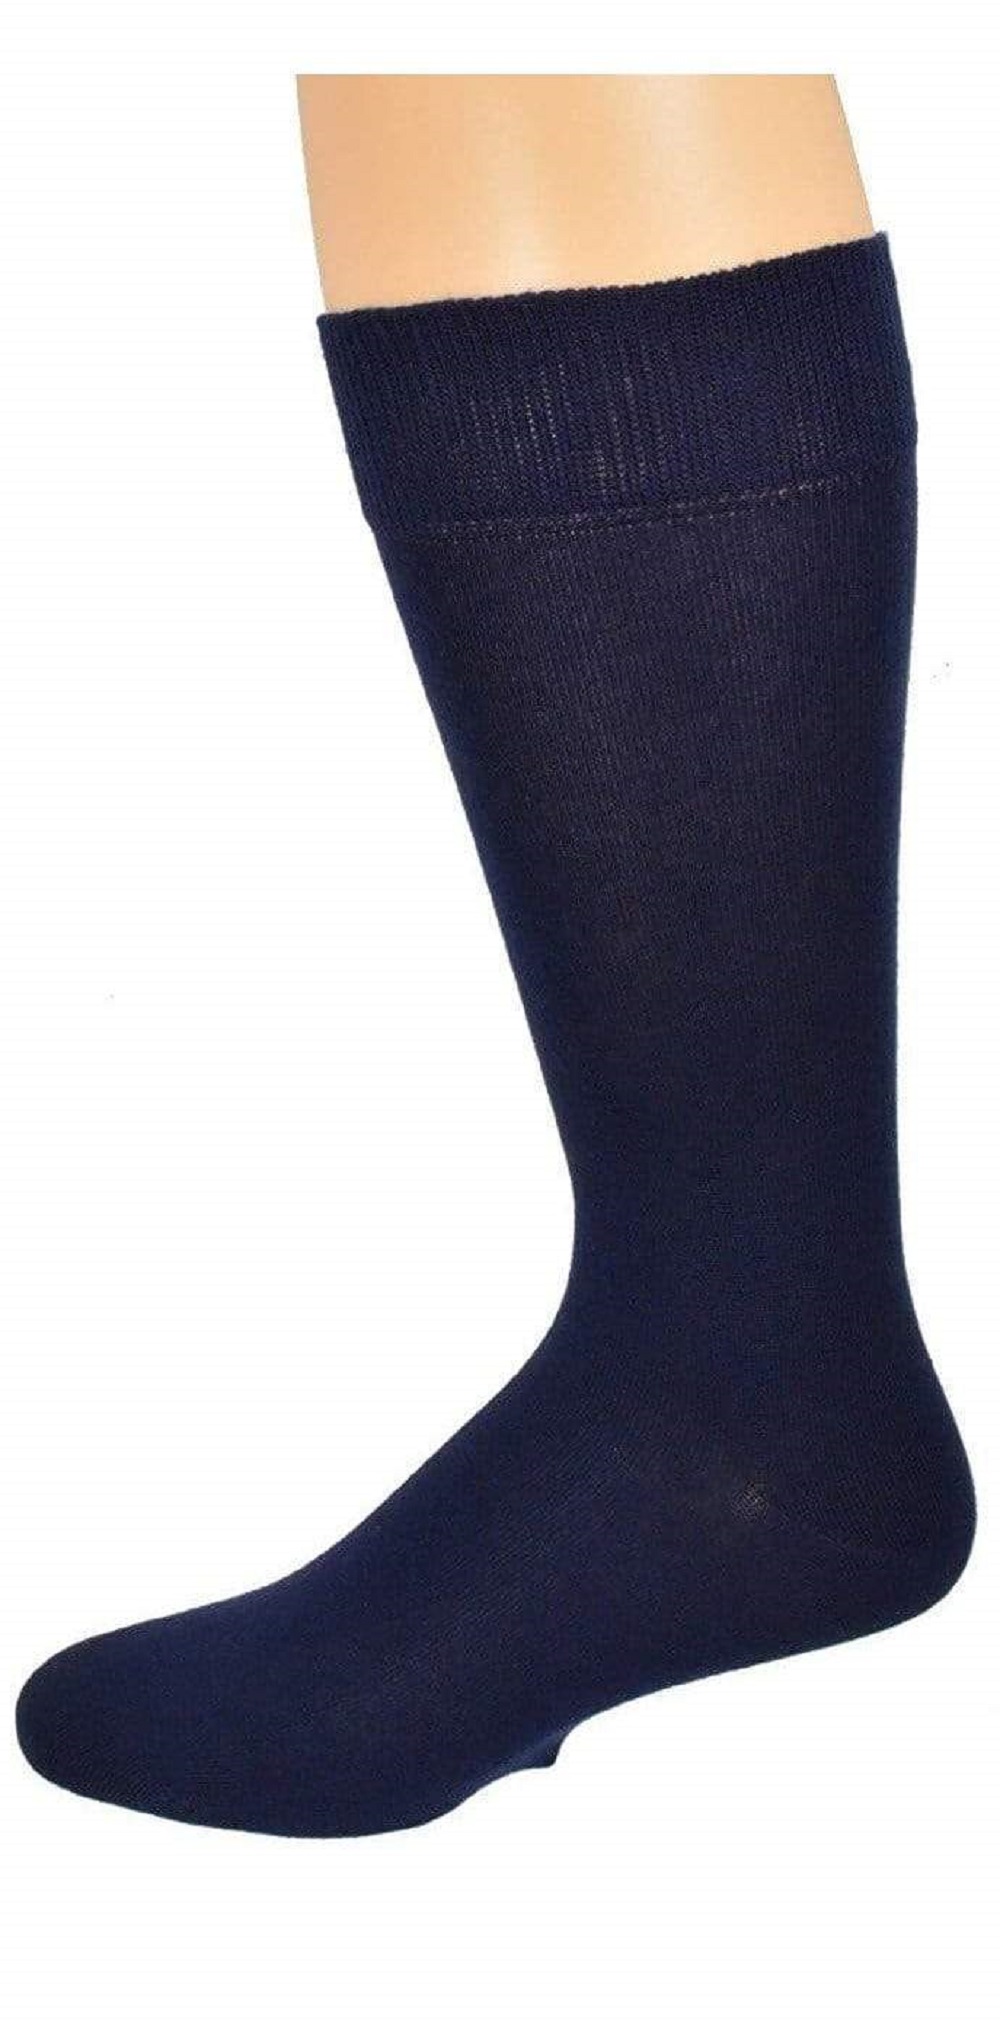 Sierra Socks Men's Casual Cotton Blend Fashion Design Mid Calf Dress Crew Socks, 3 Pairs (One Size: Fits US Men’s Shoe Size 6-12/ Sock Size, Navy Square/Navy Plain (M5500U)) - image 3 of 5